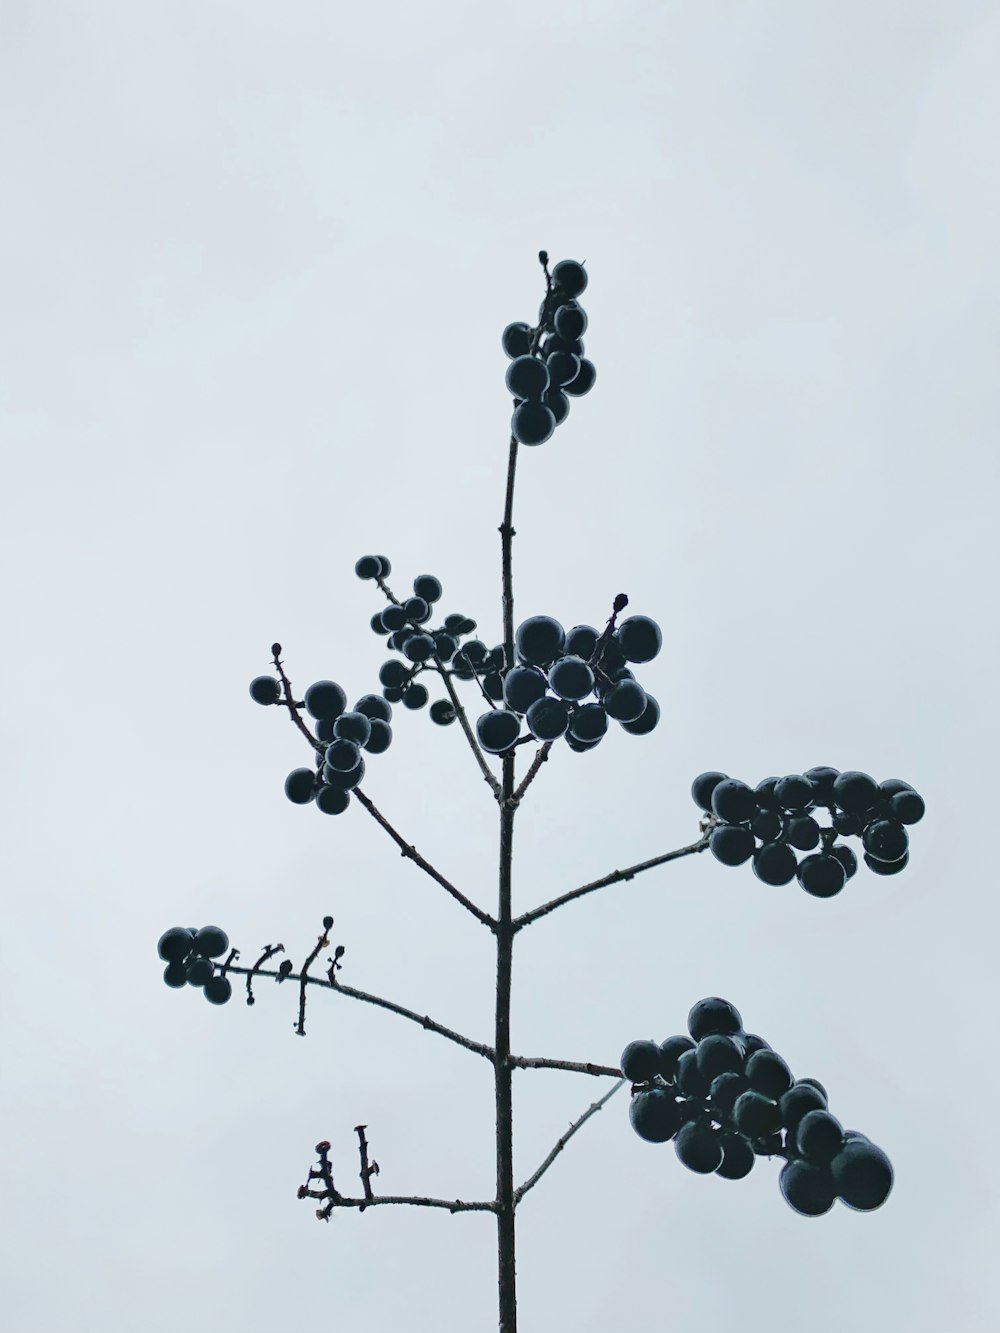 black round fruits on tree branch